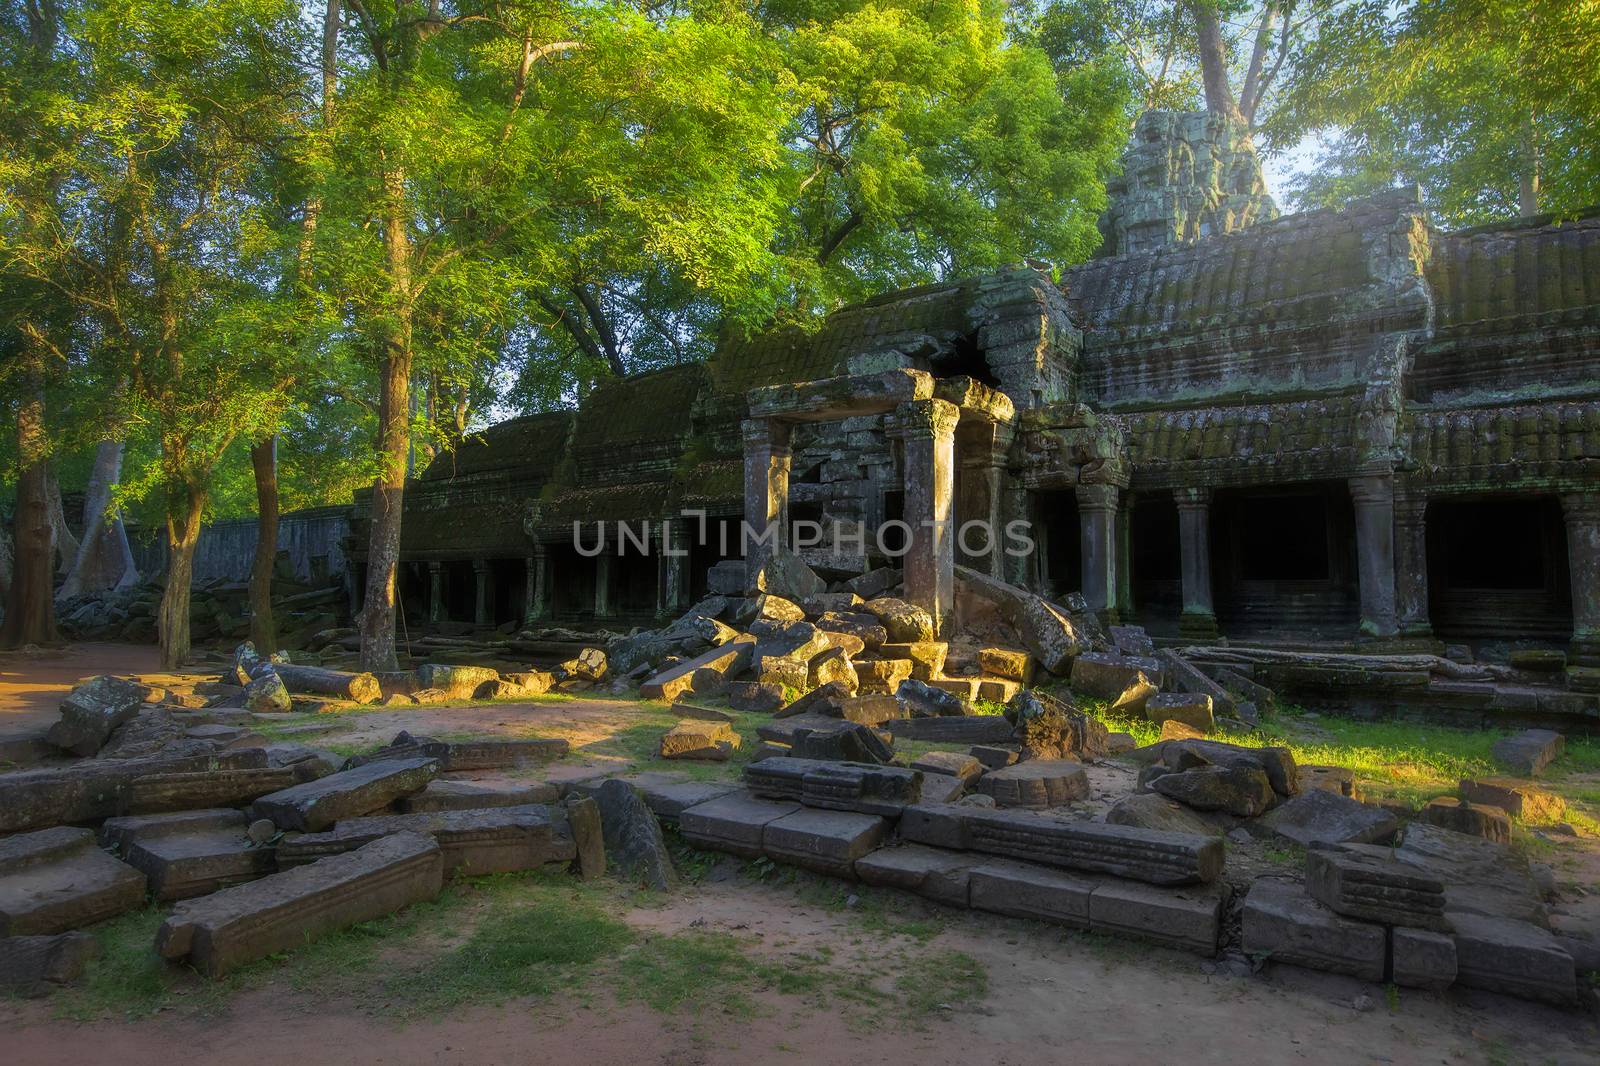 Sunrise over the Ta Phrom temple in Angkor, Cambodia